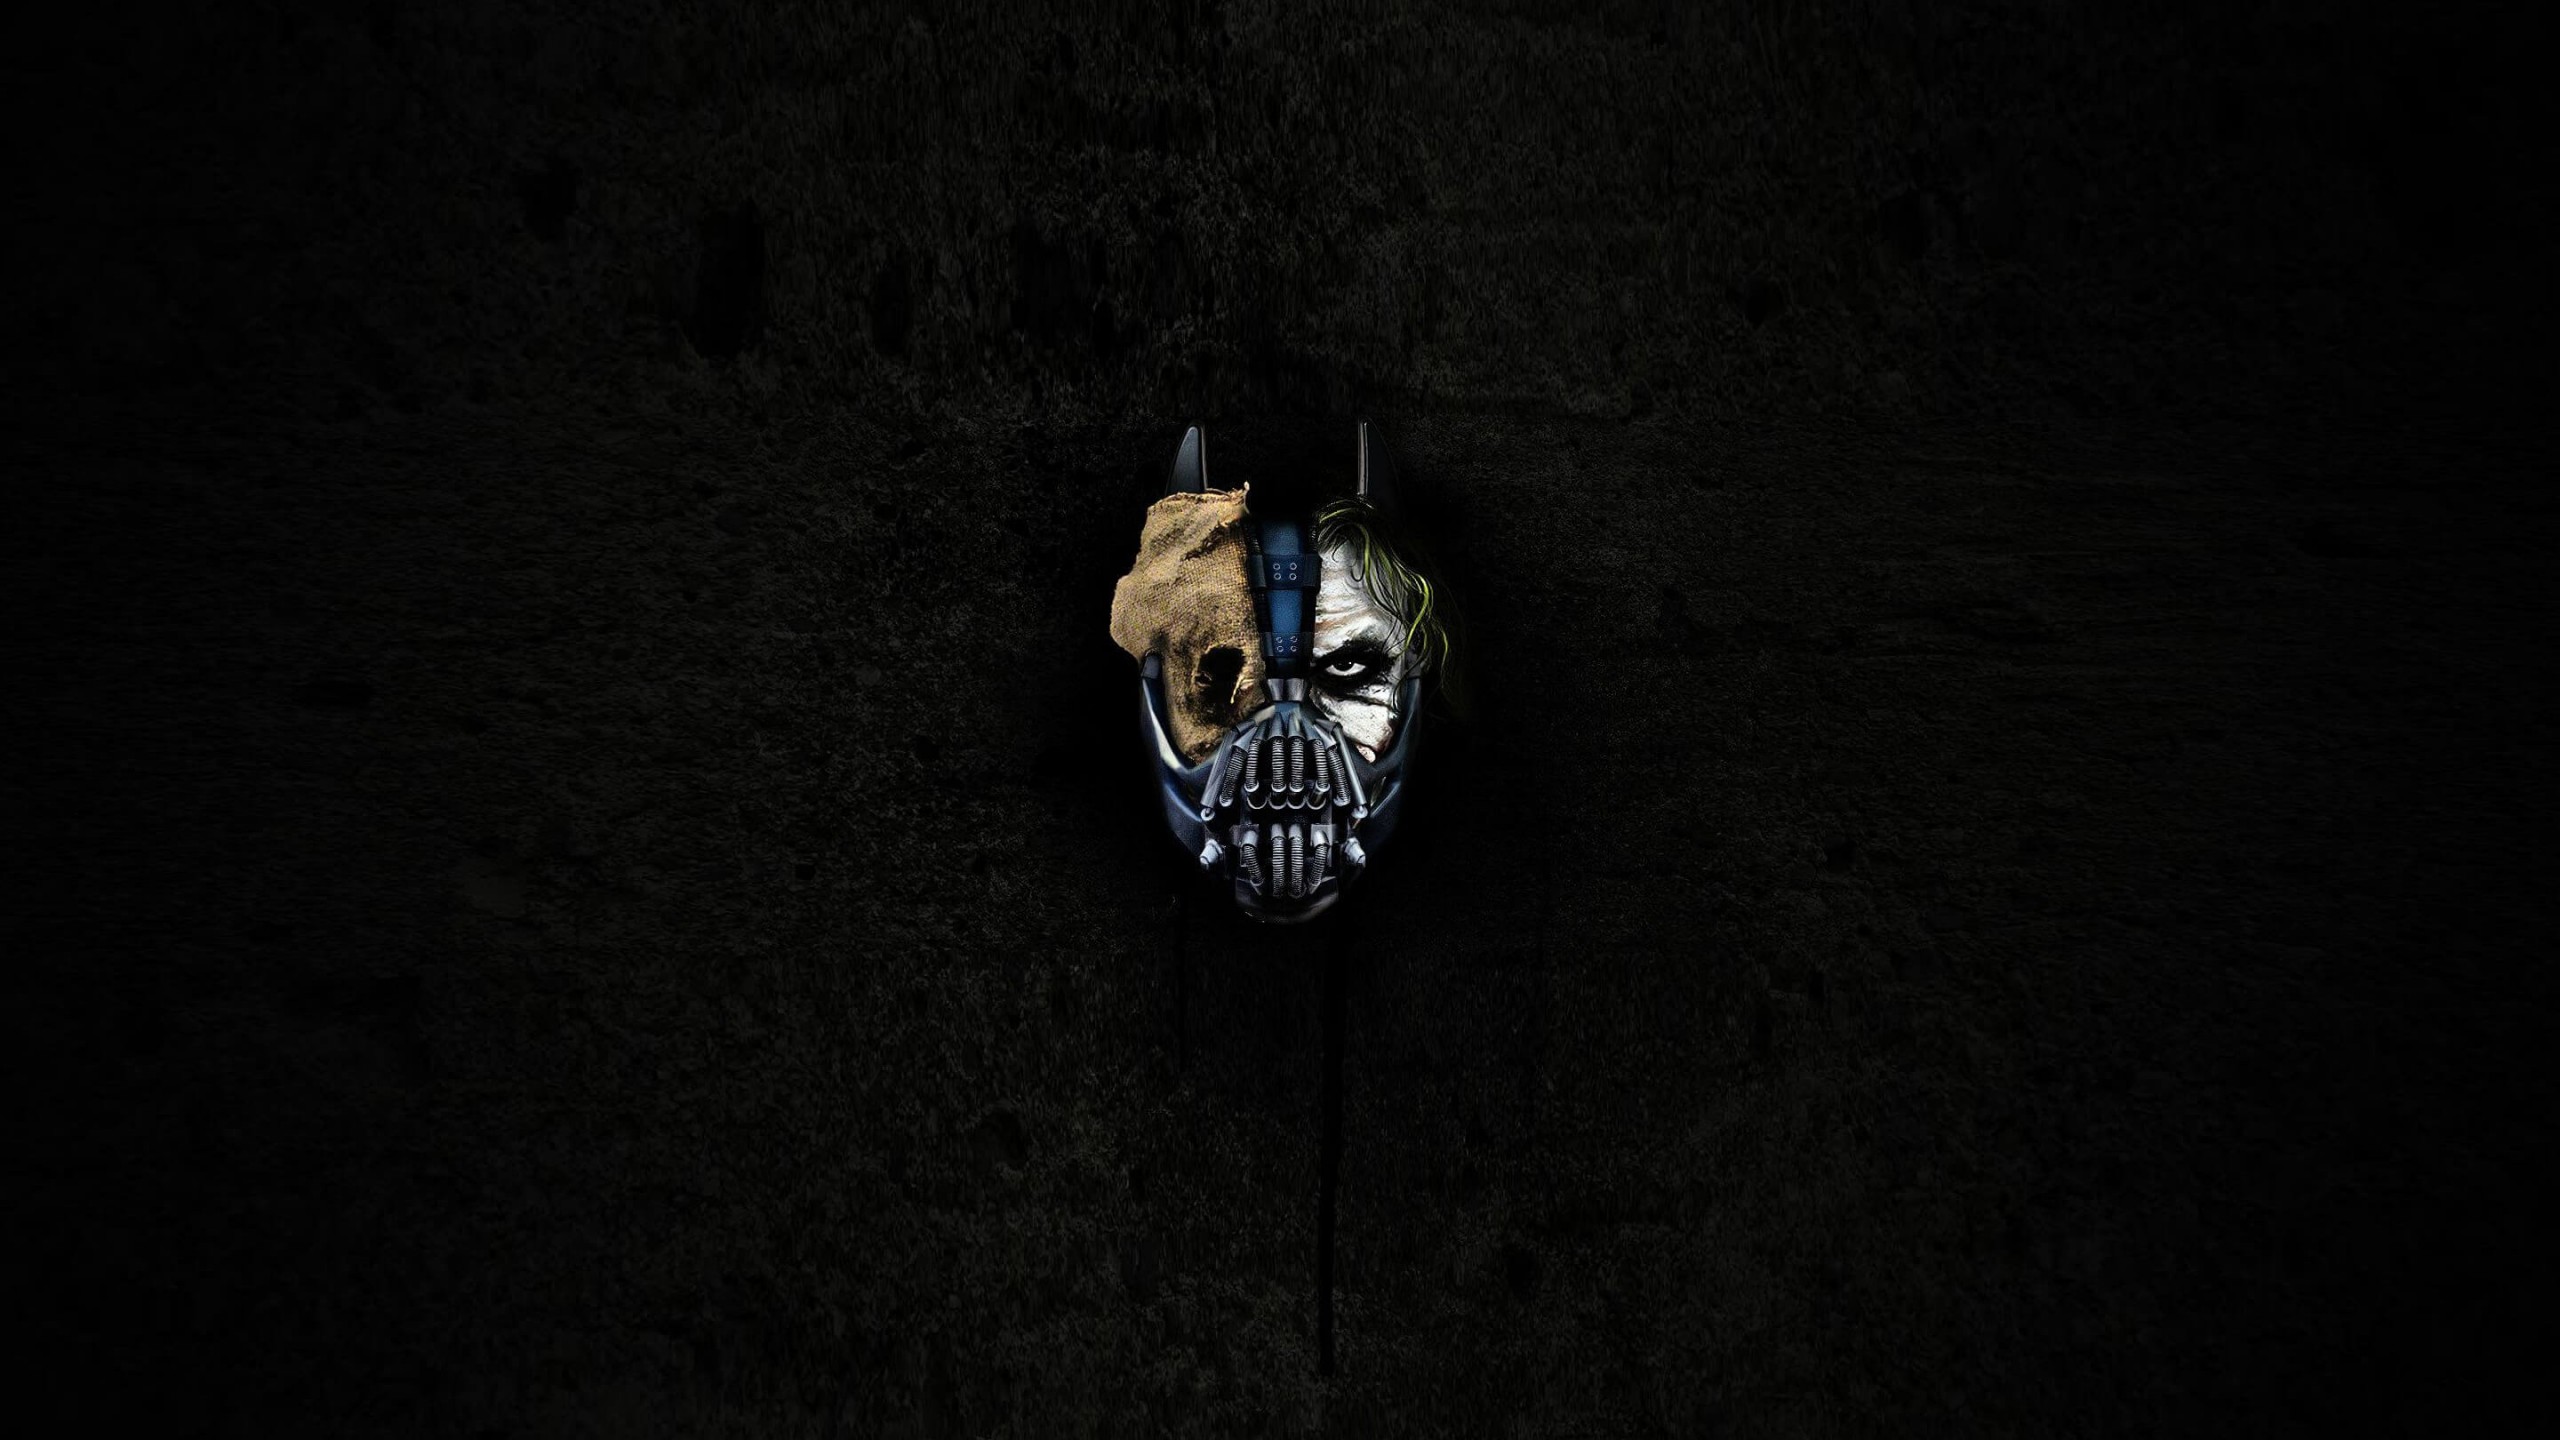 The Dark Knight Trilogy Wallpaper for Social Media YouTube Channel Art